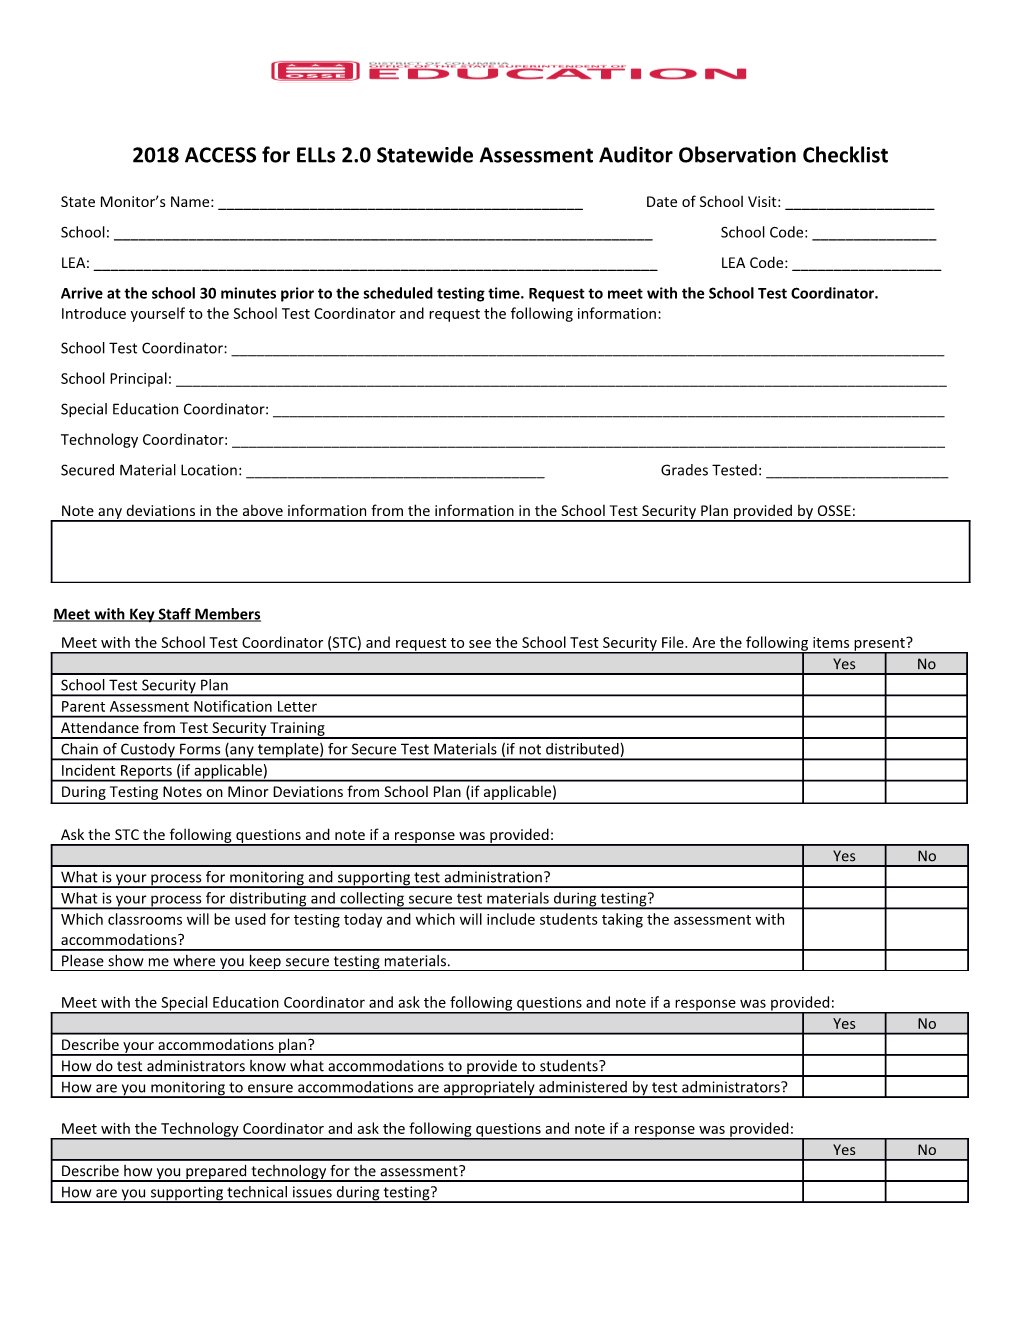 2018 ACCESS for Ells 2.0 Statewide Assessment Auditorobservation Checklist